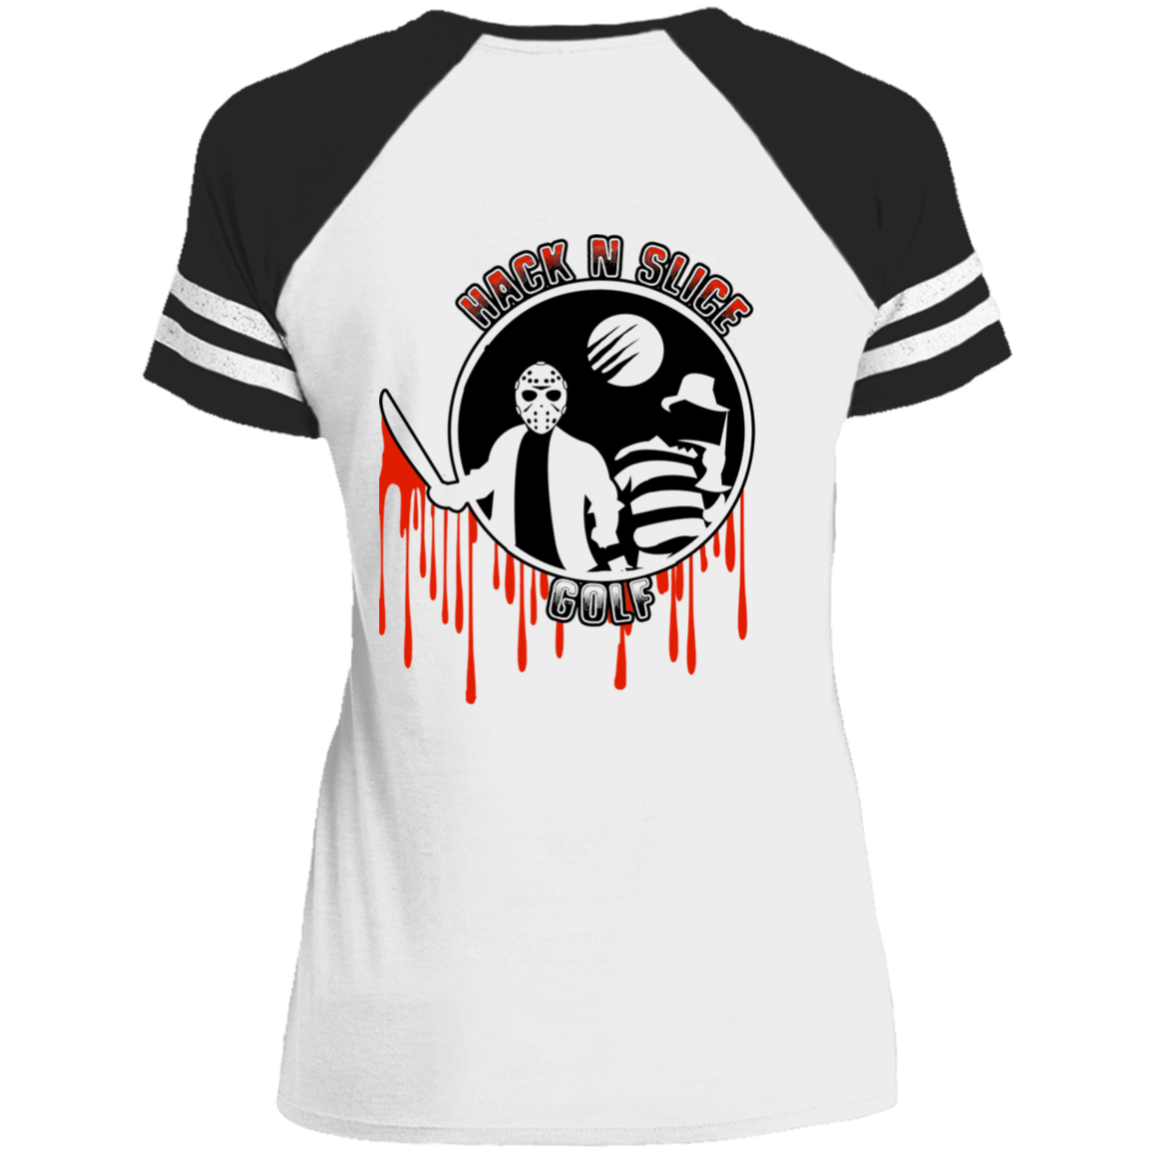 OPG Custom Design #23. Hack N Slice Golf. Freddy and Jason Fan Art. Ladies' Game V-Neck T-Shirt